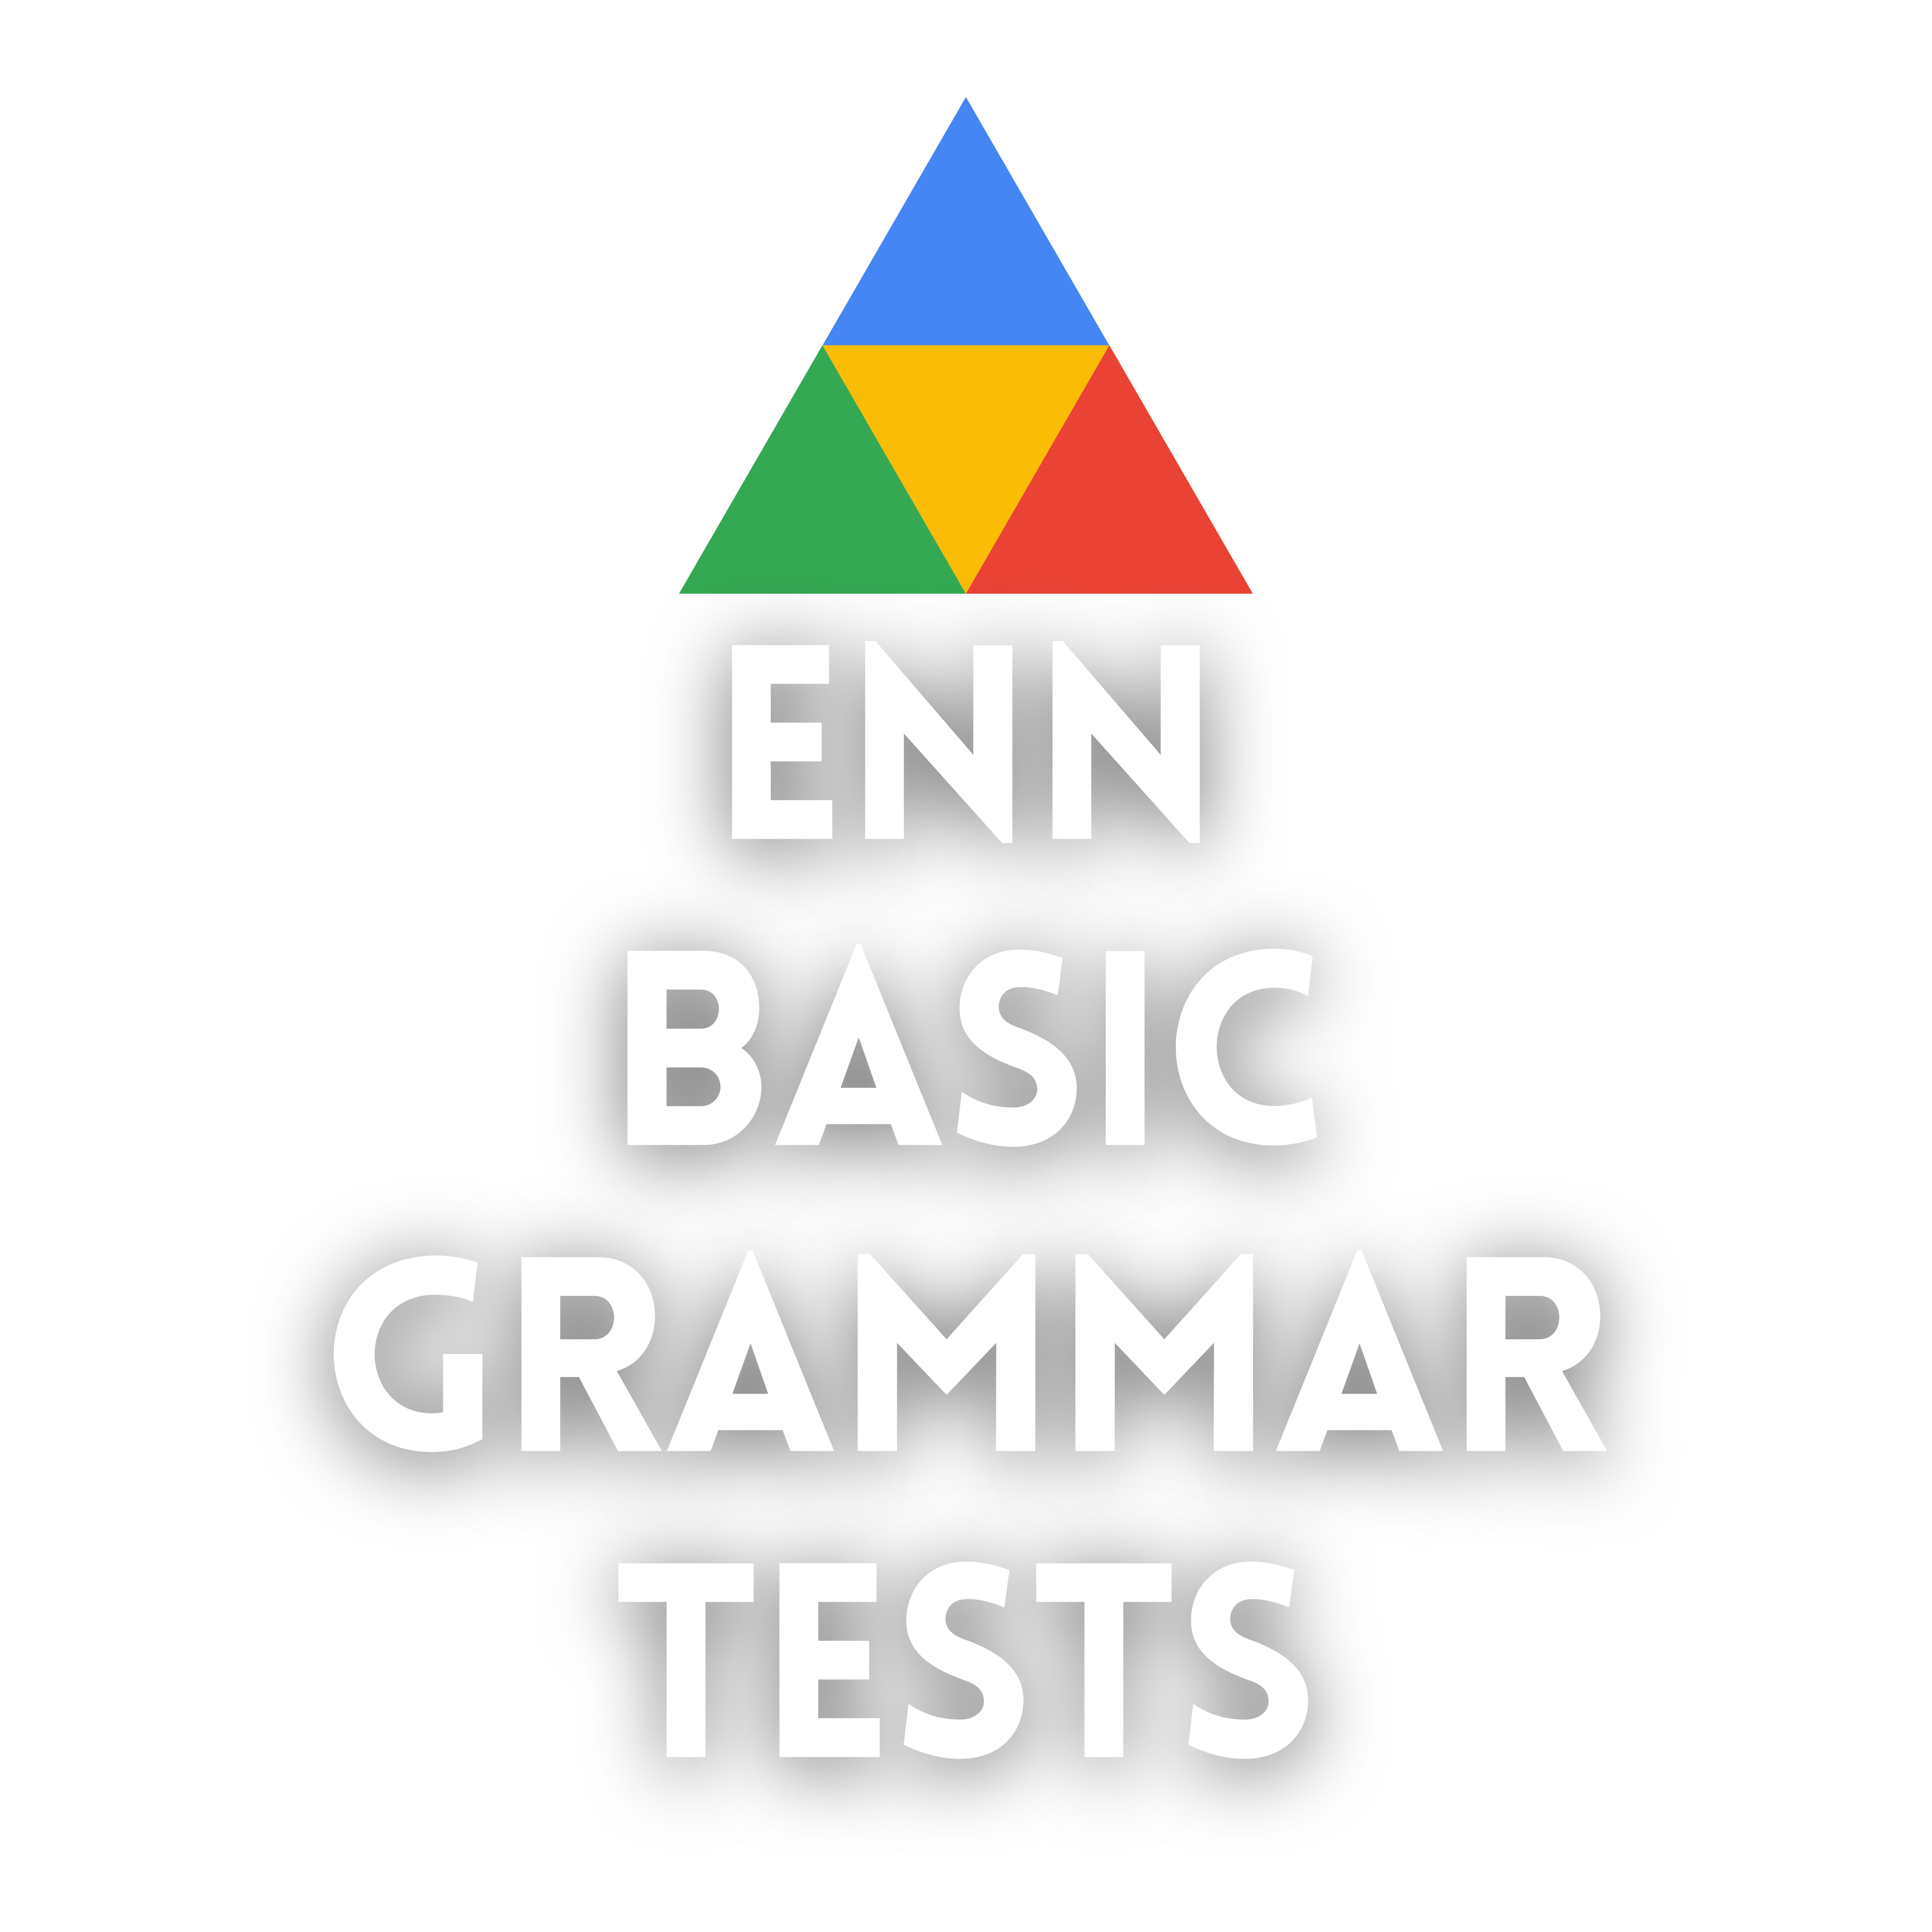 ENN Basic Grammar Tests